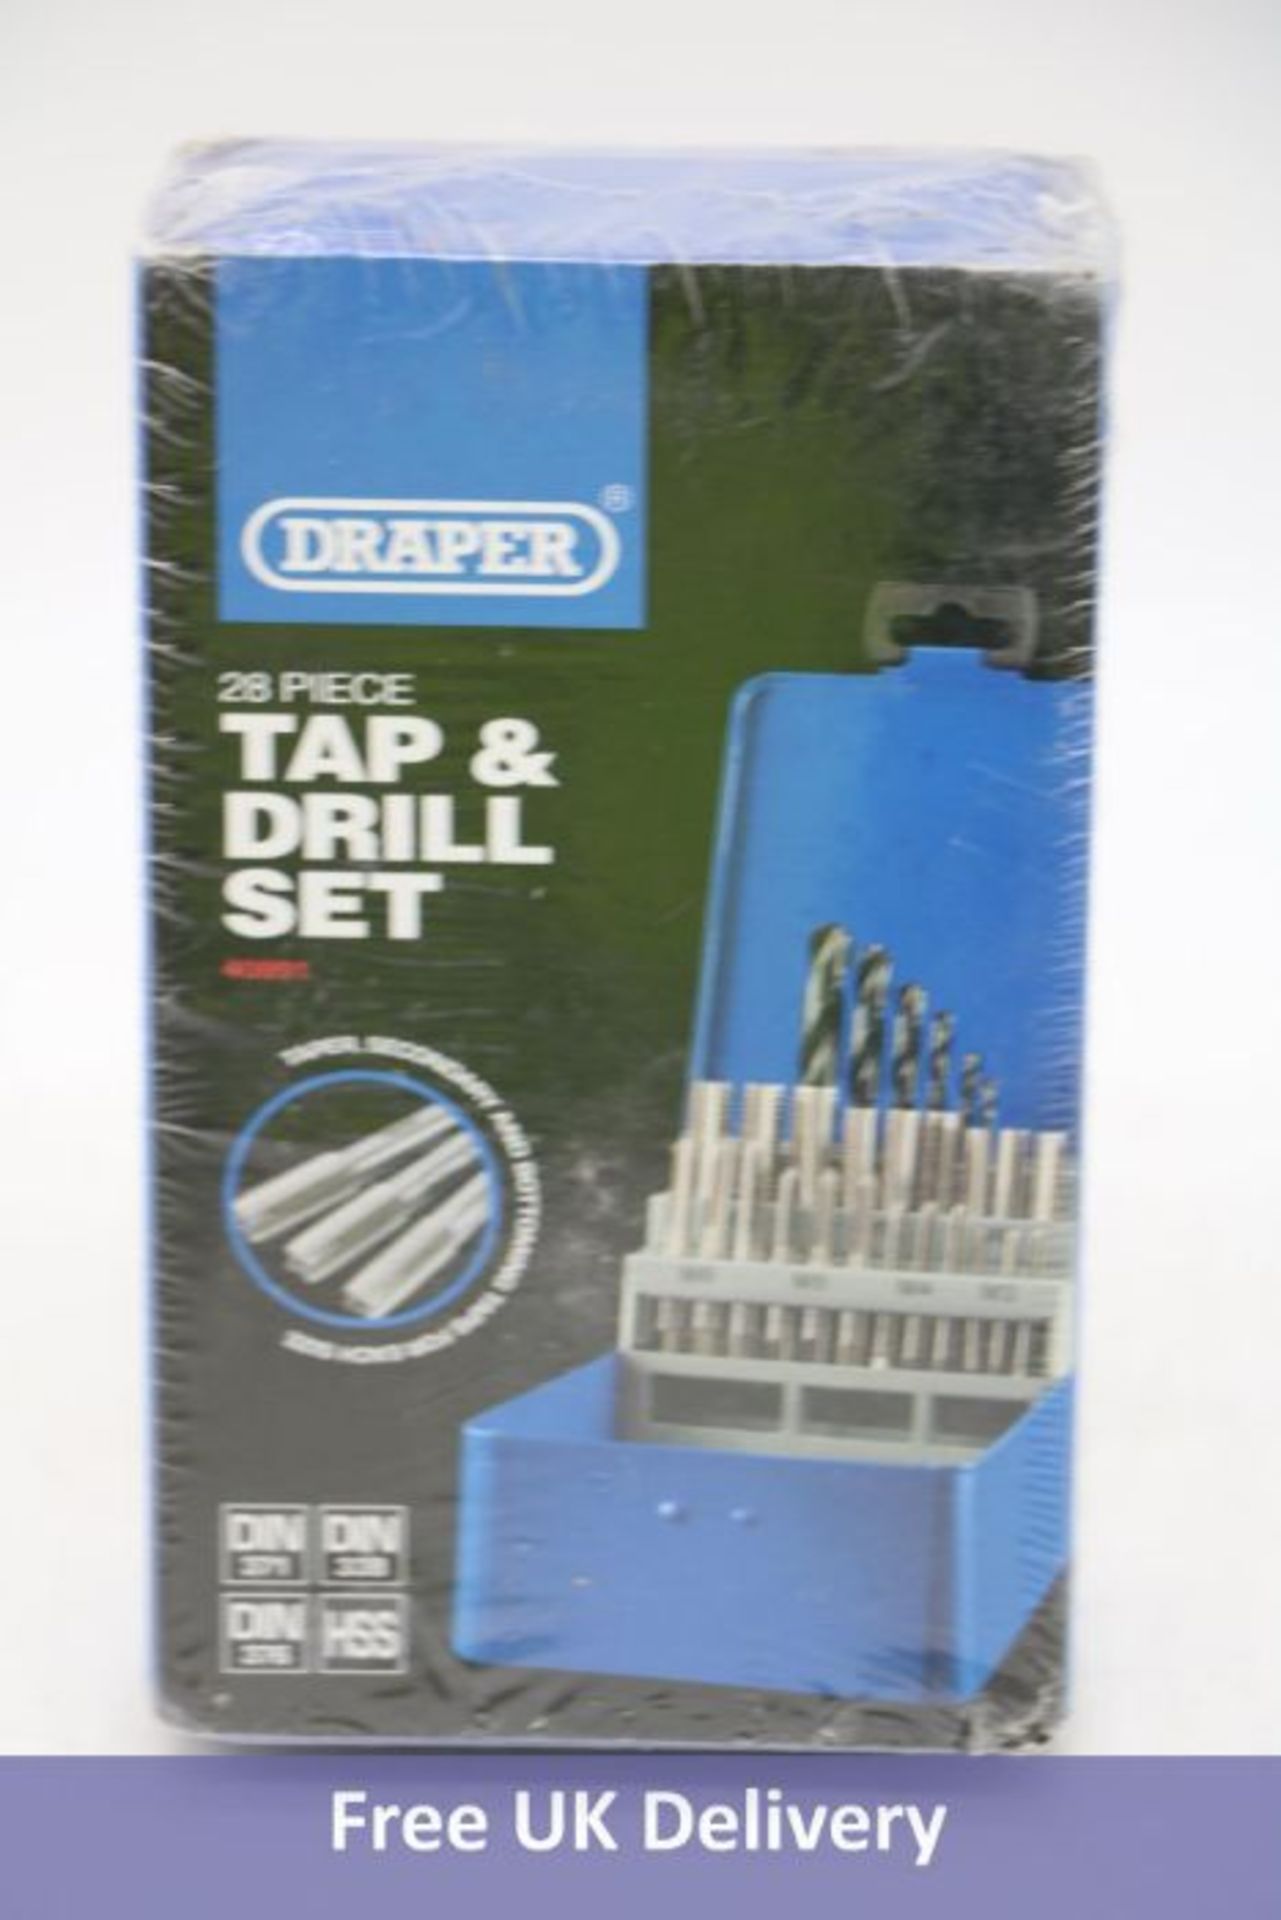 Draper TDS-28 28 Piece Tap and Drill Set